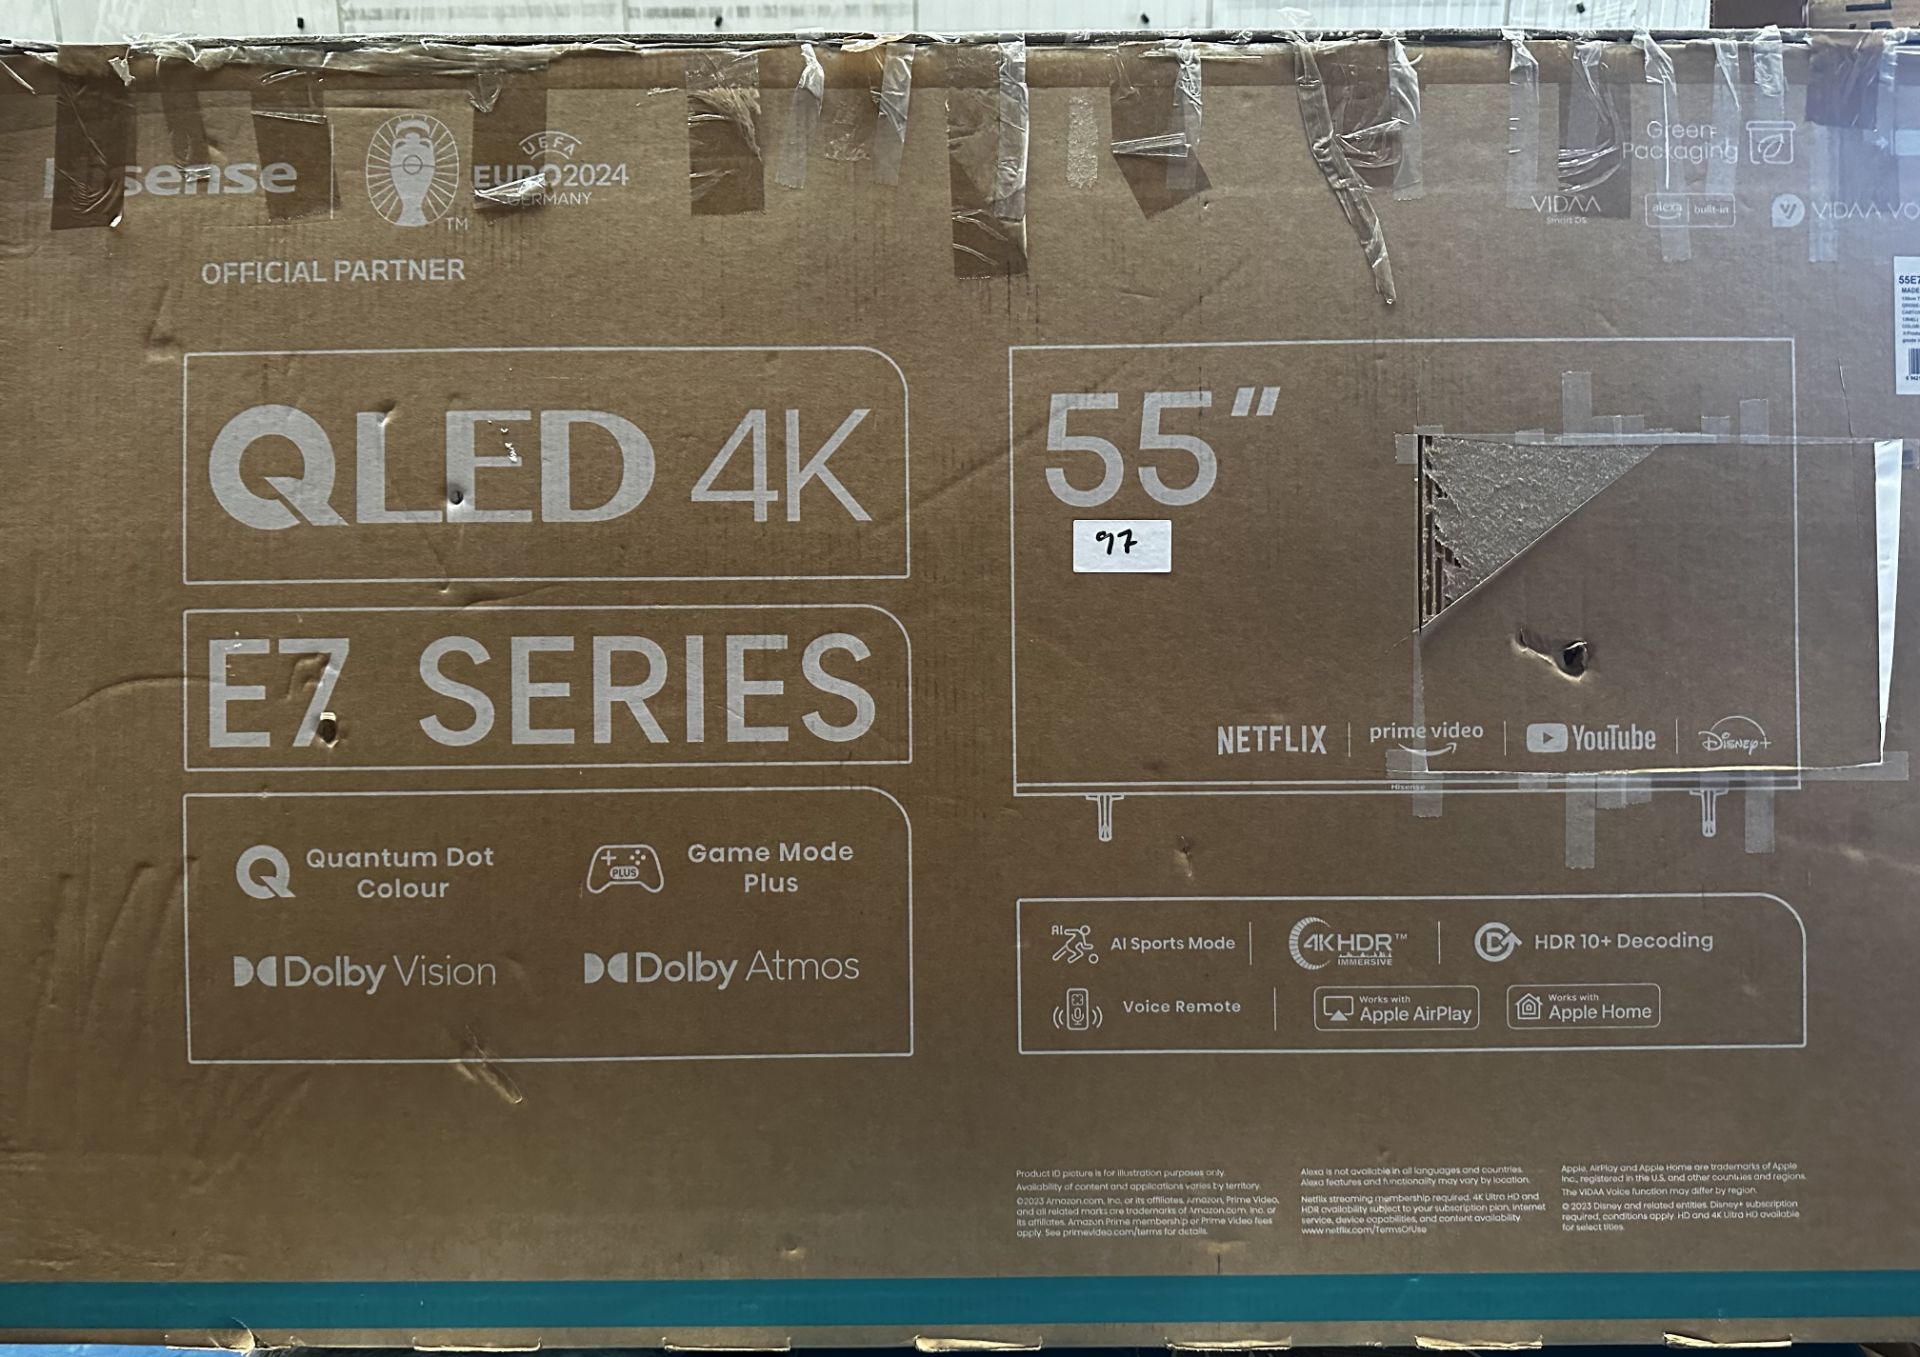 Hisense QLED 4K E7 Series 55"" Smart TV. RRP £420 - GRADE U